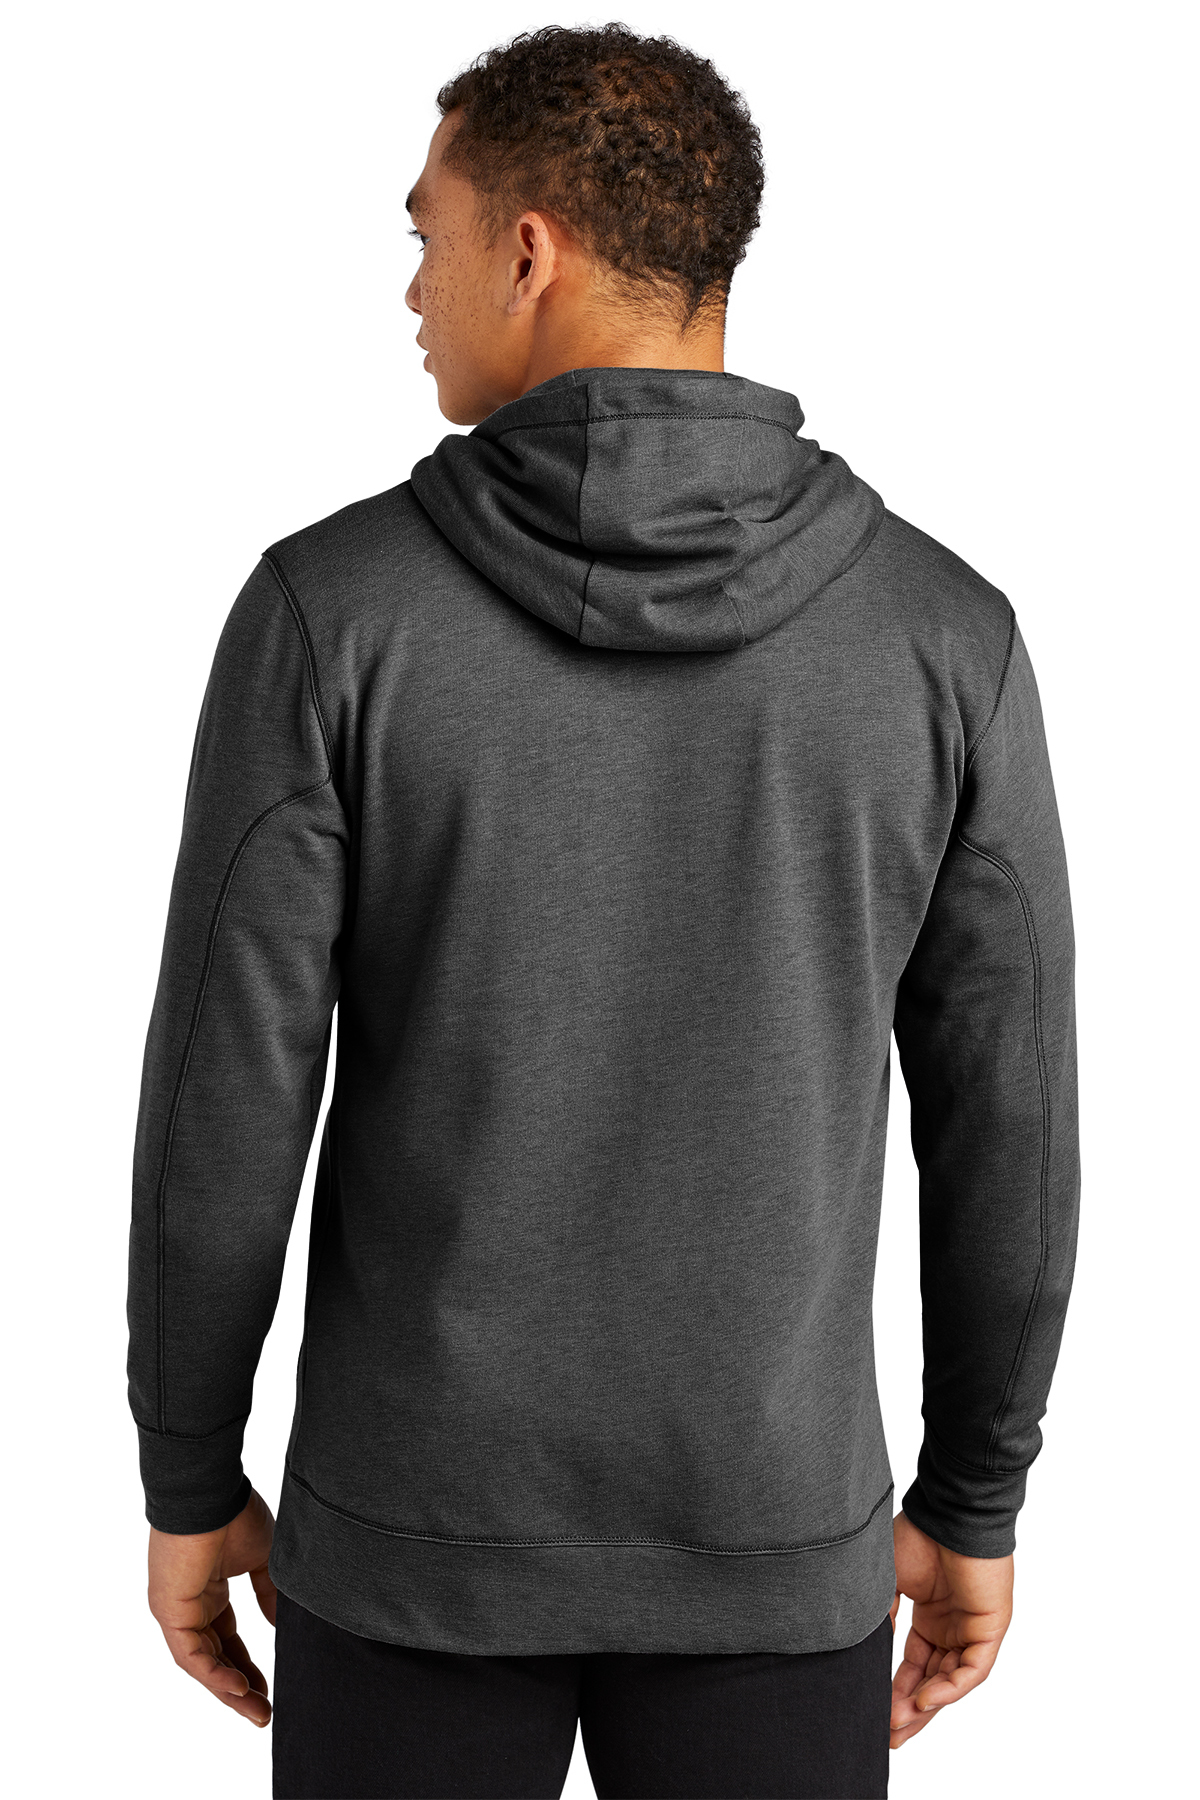 New Era NEA511 - Men's Tri-Blend Fleece Full Zip Hoodie $36.41 